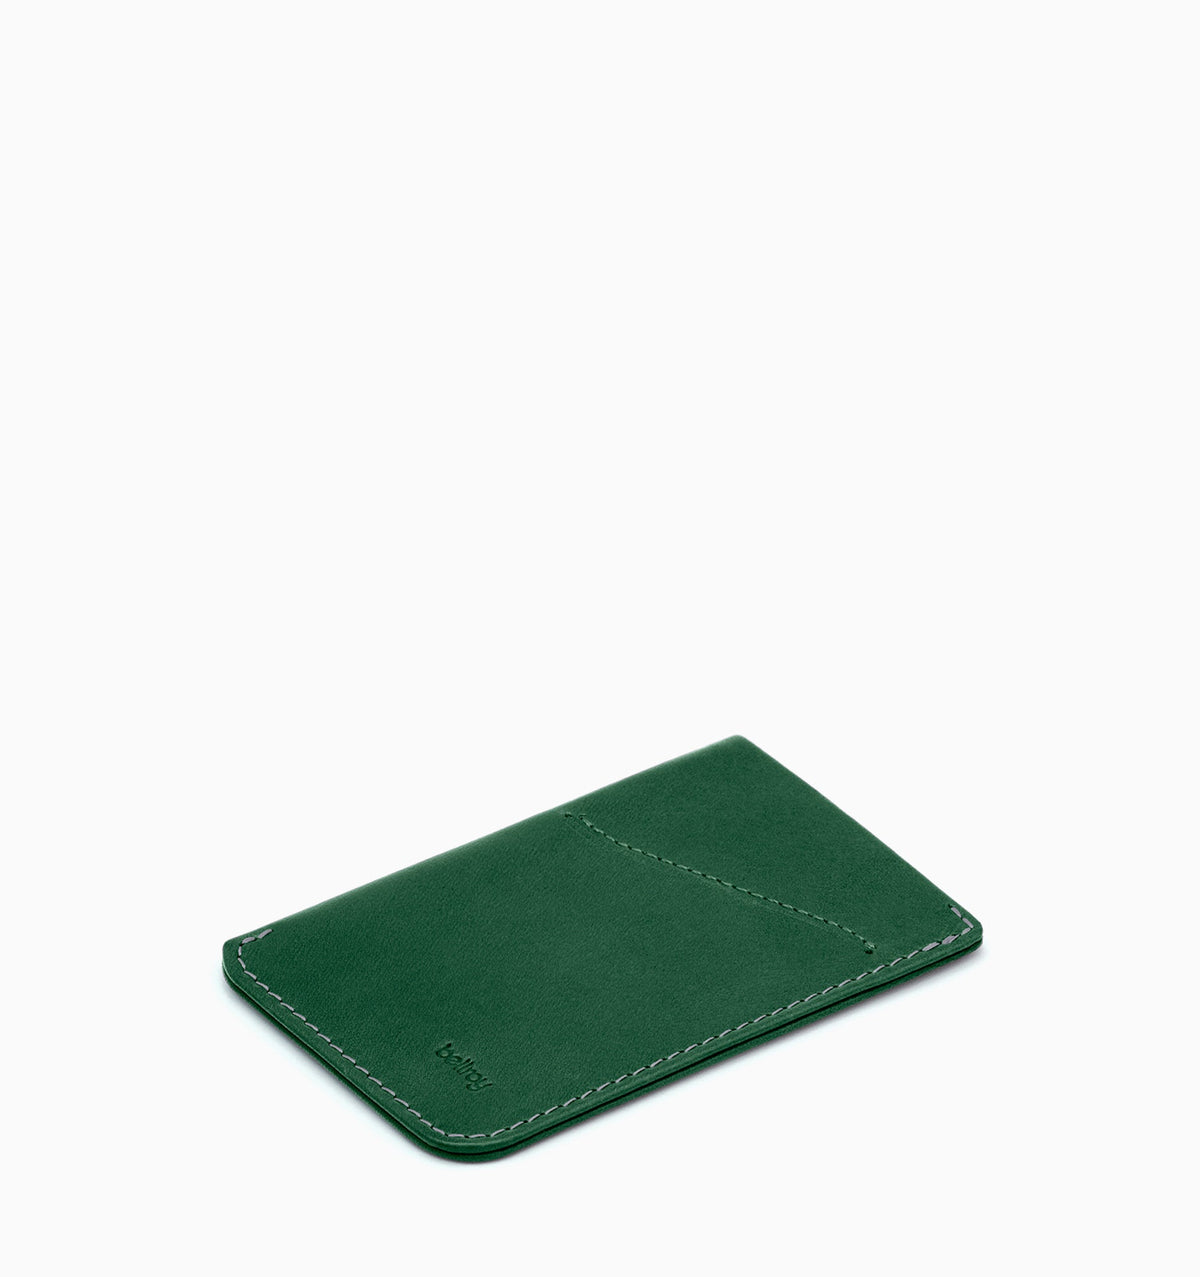 Bellroy Card Sleeve Wallet - Racing Green